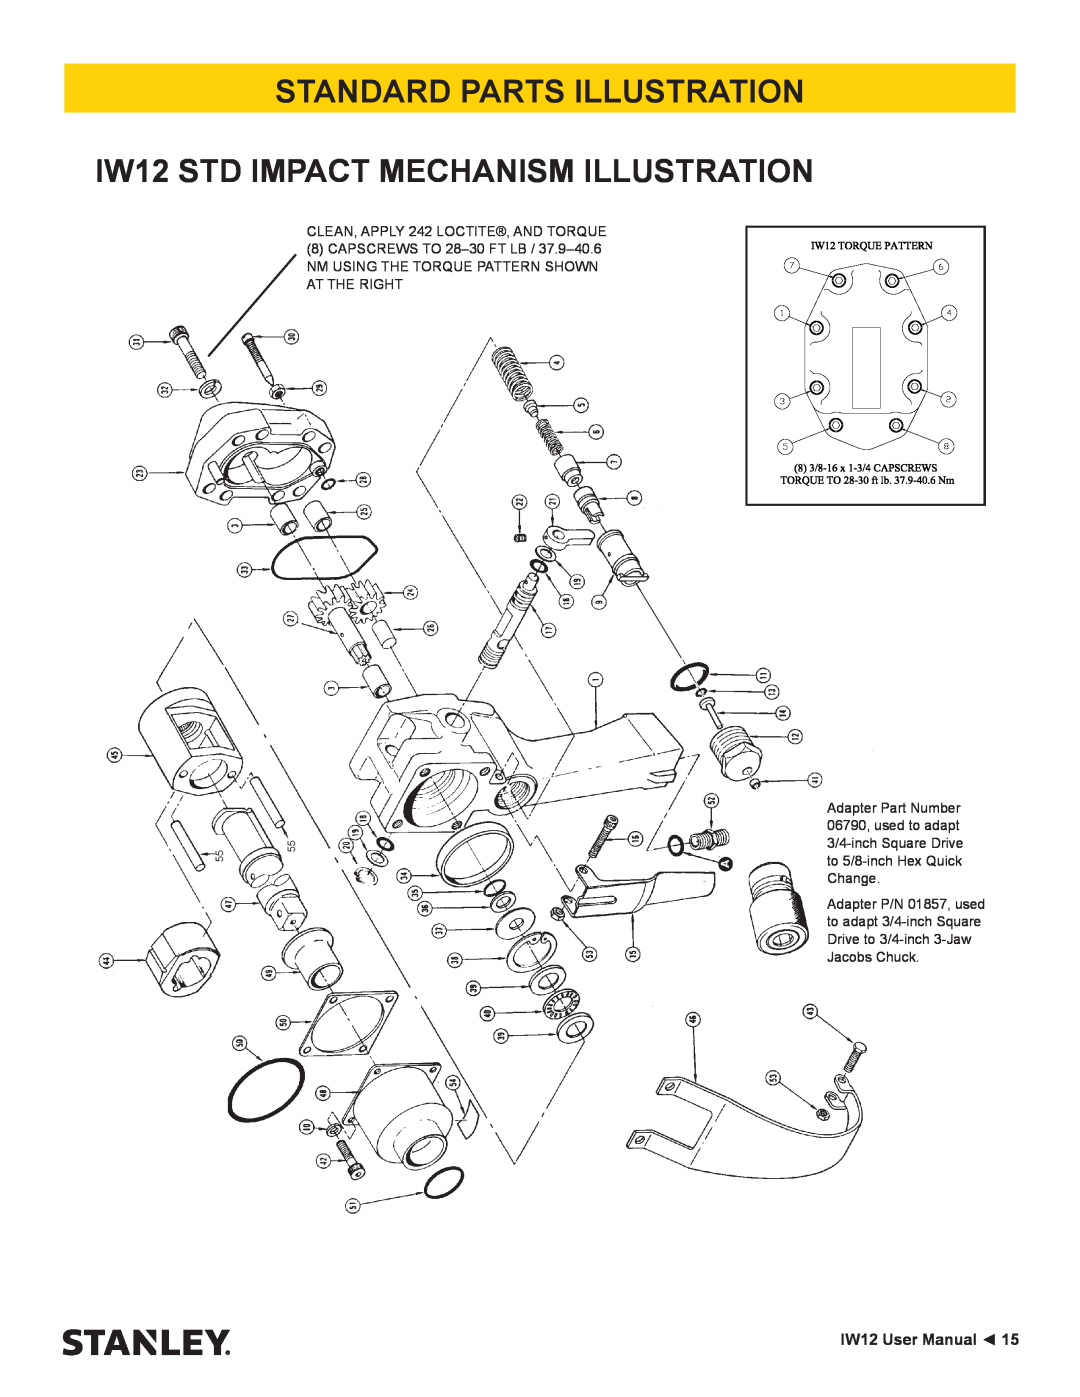 Stanley Black & Decker user manual Standard Parts Illustration, IW12 STD IMPACT MECHANISM ILLUSTRATION, IW12 User Manual 